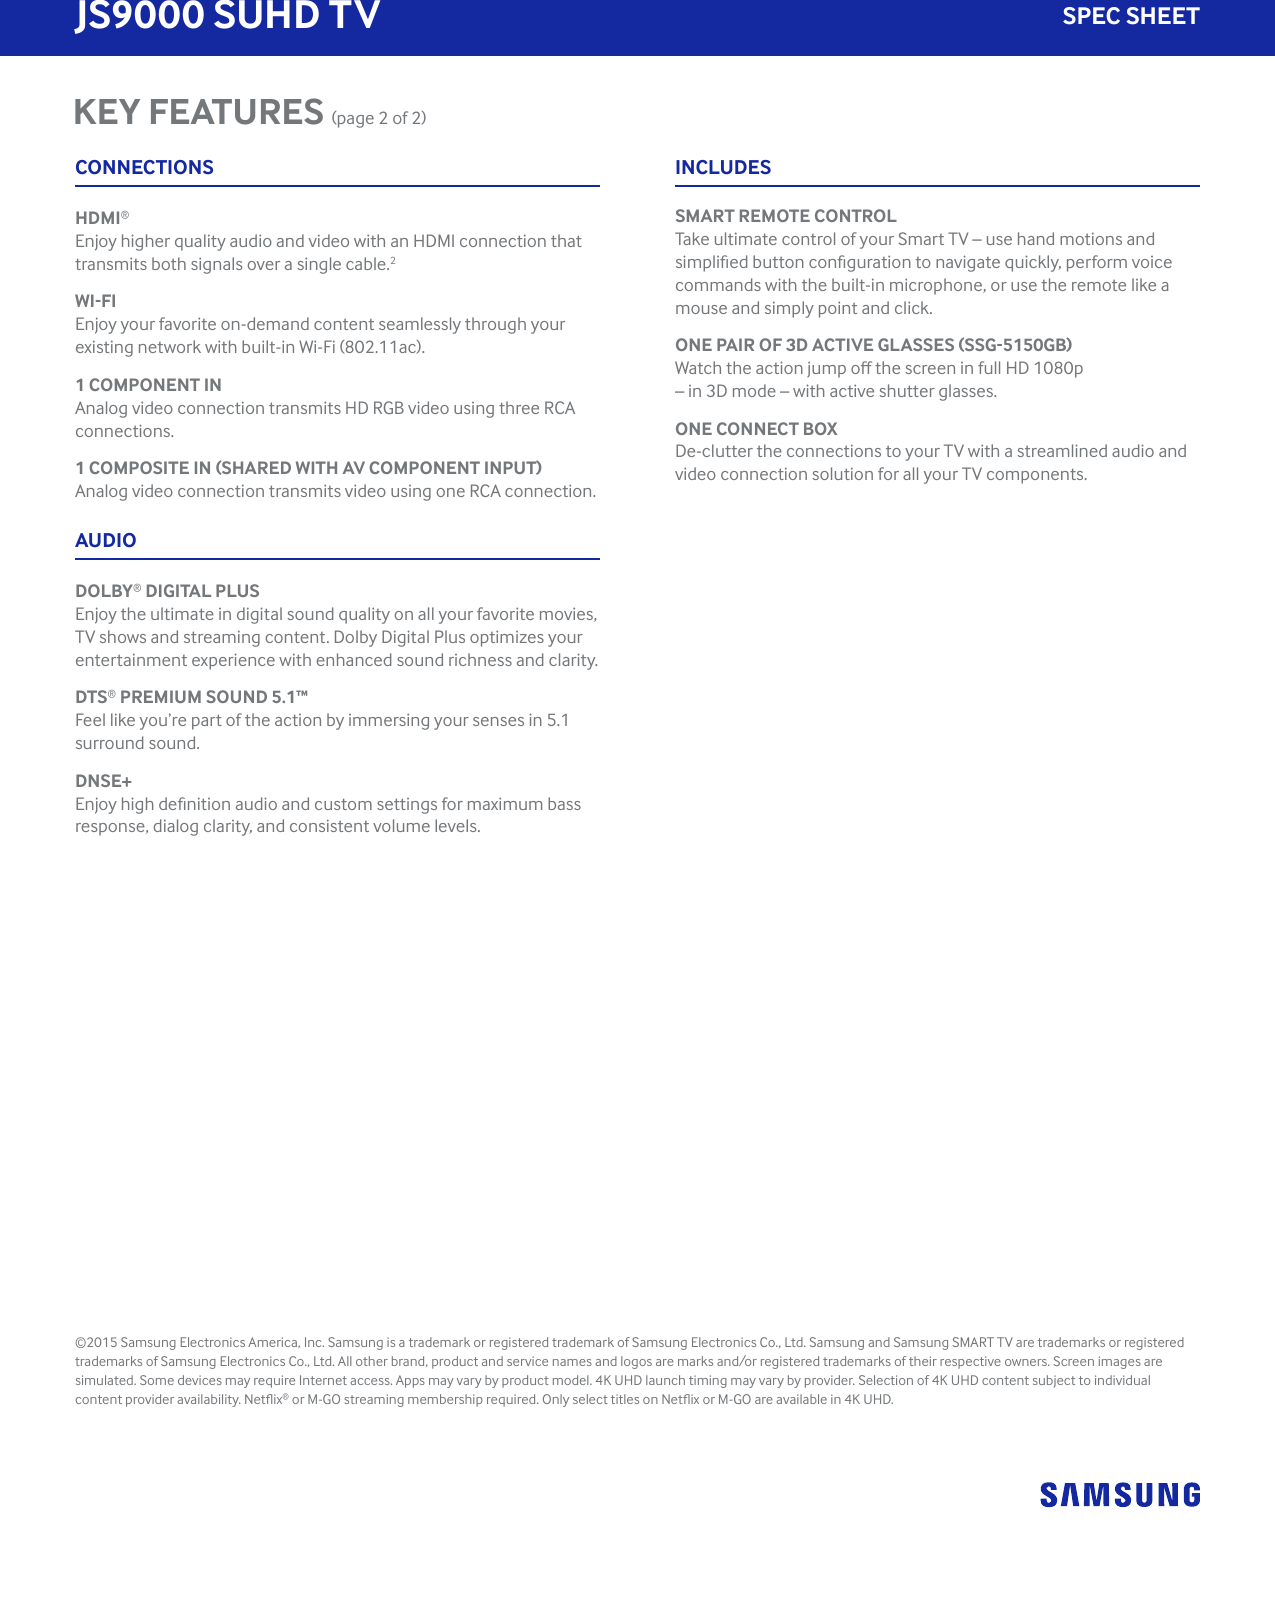 Page 3 of 5 - Samsung Samsung-Un65Js9000Fxza-Specification-Sheet-  Samsung-un65js9000fxza-specification-sheet